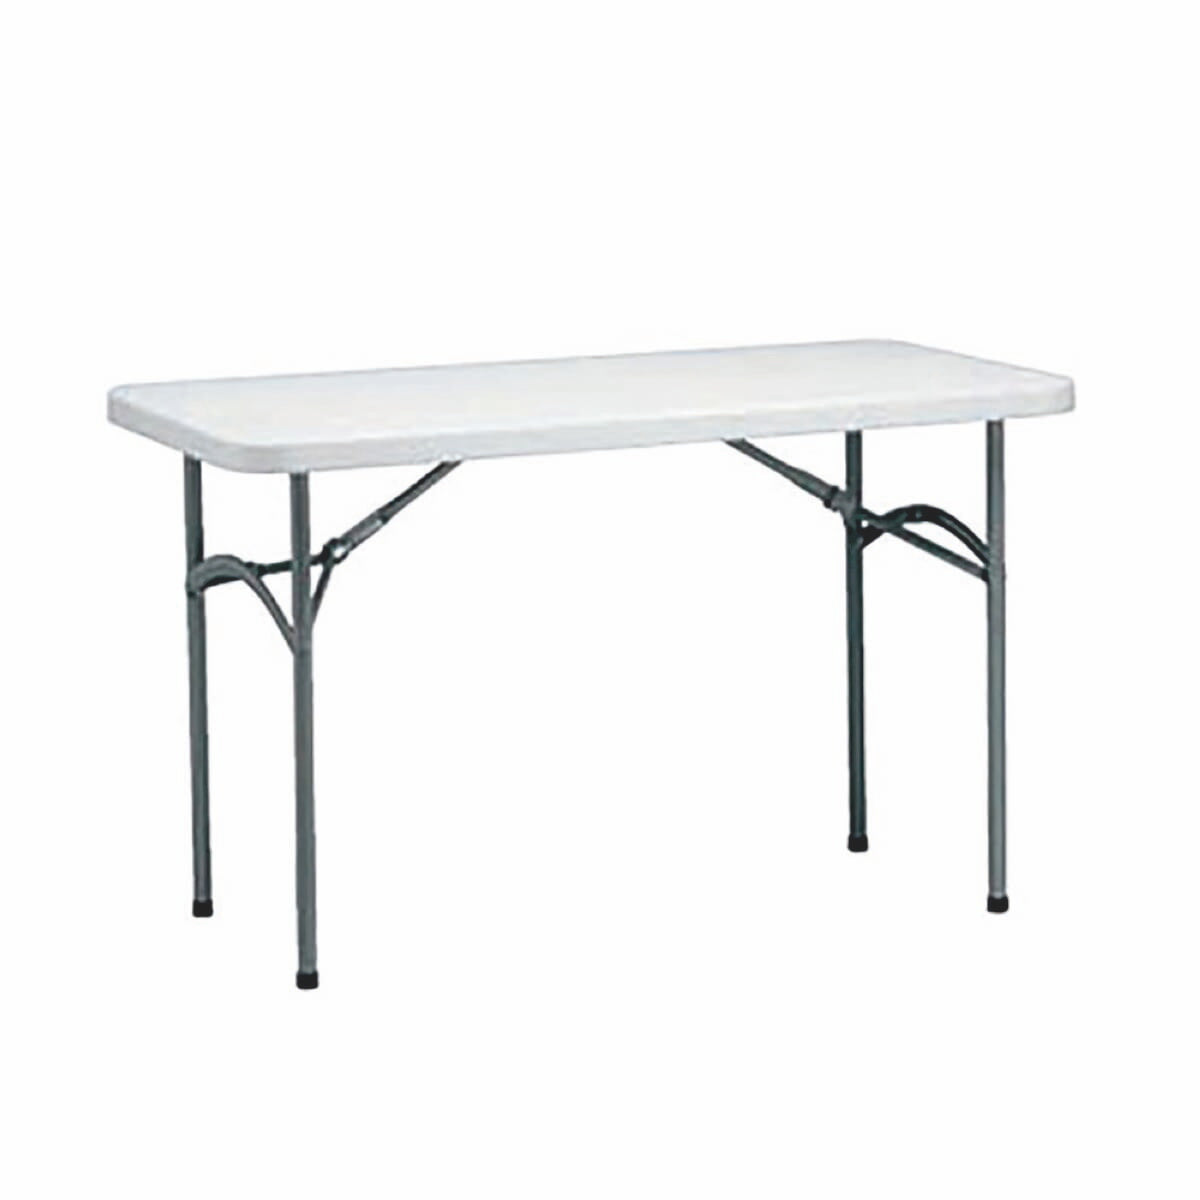 Garbar Strauss rectangular folding table indoors, outdoors